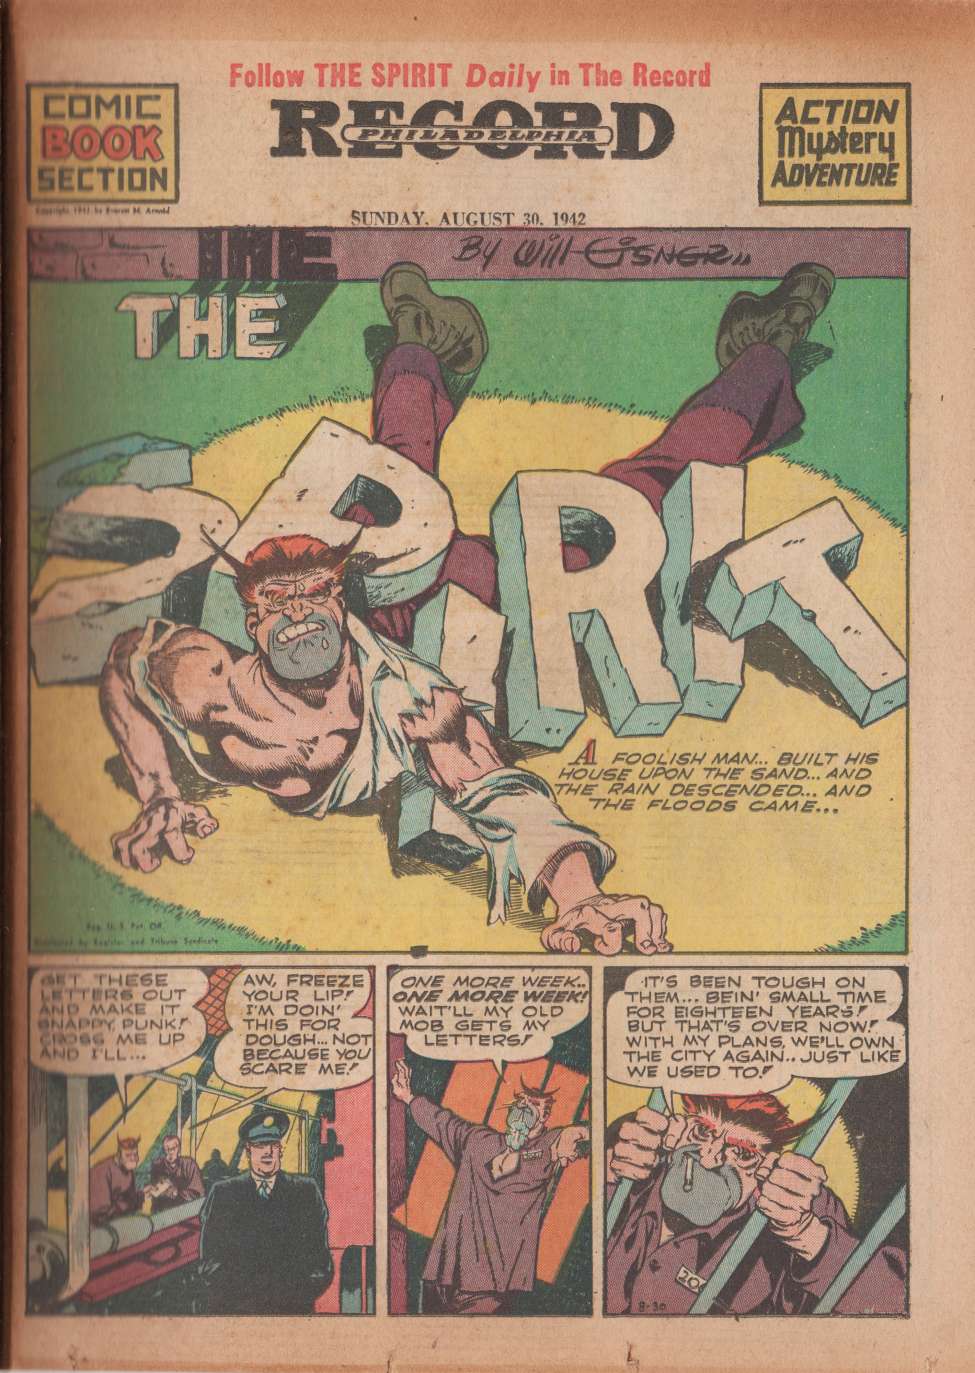 Comic Book Cover For The Spirit (1942-08-30) - Philadelphia Record